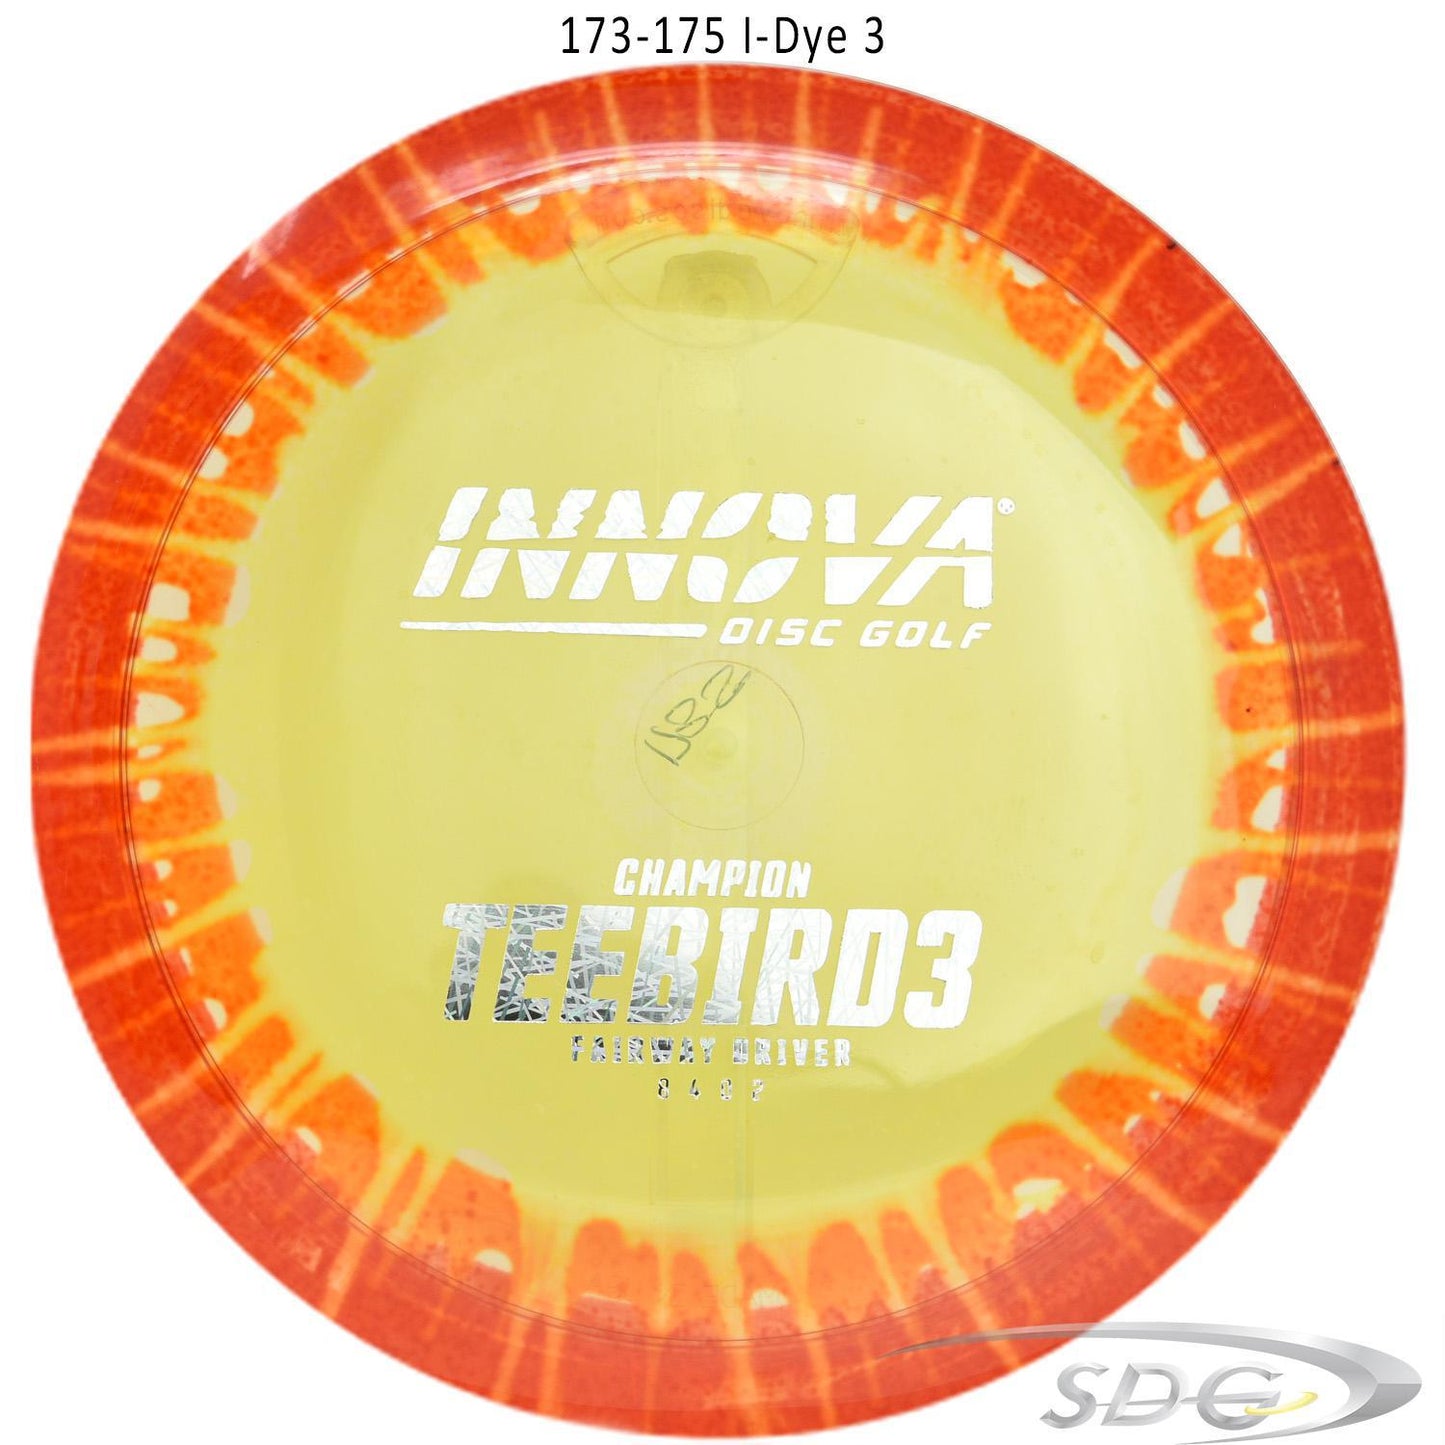 innova-champion-teebird3-i-dye-disc-golf-fairway-driver 173-175 I-Dye 3 